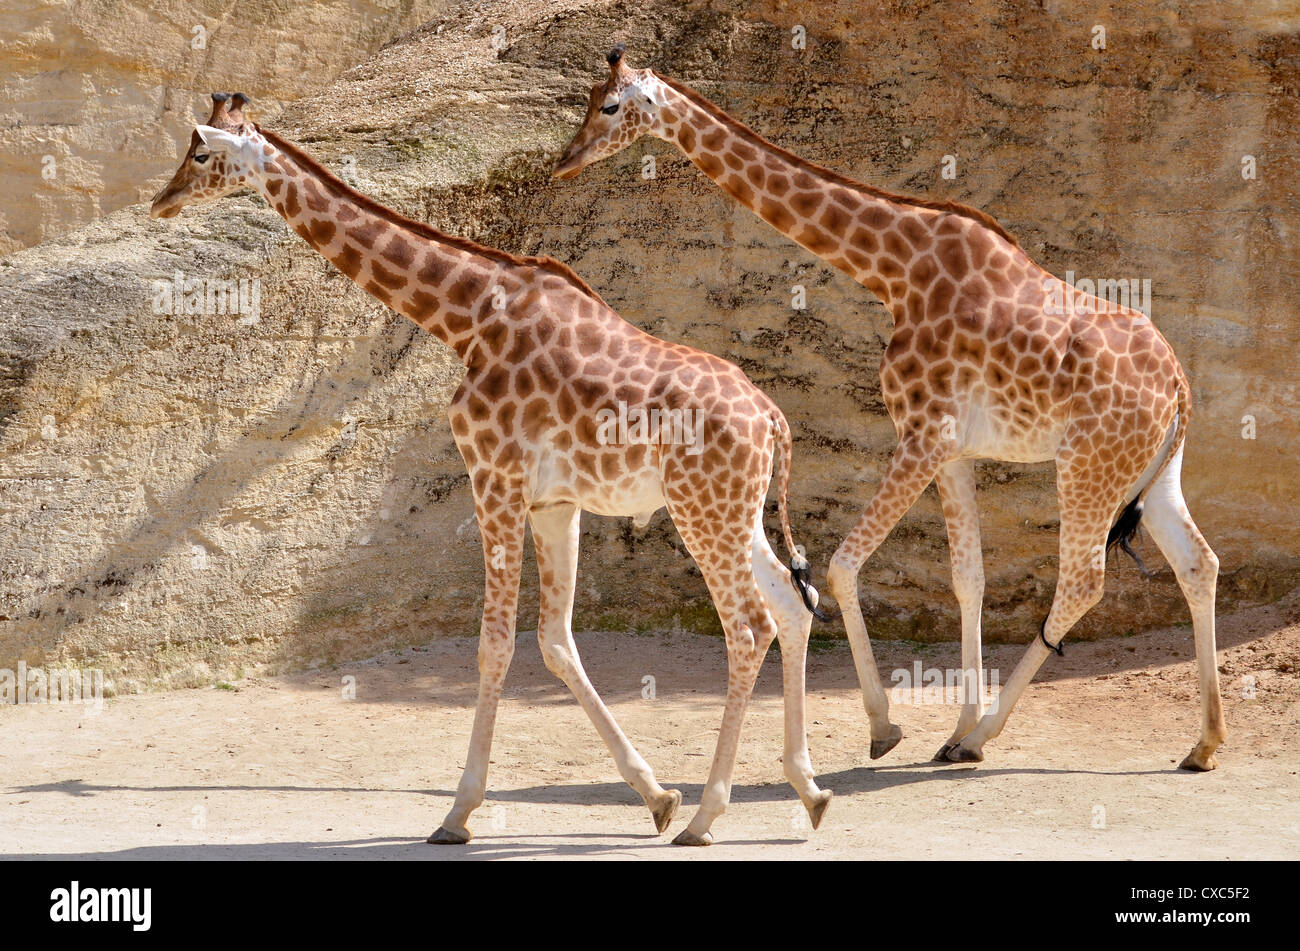 Two giraffes (Giraffa camelopardalis) walking in single file Stock Photo